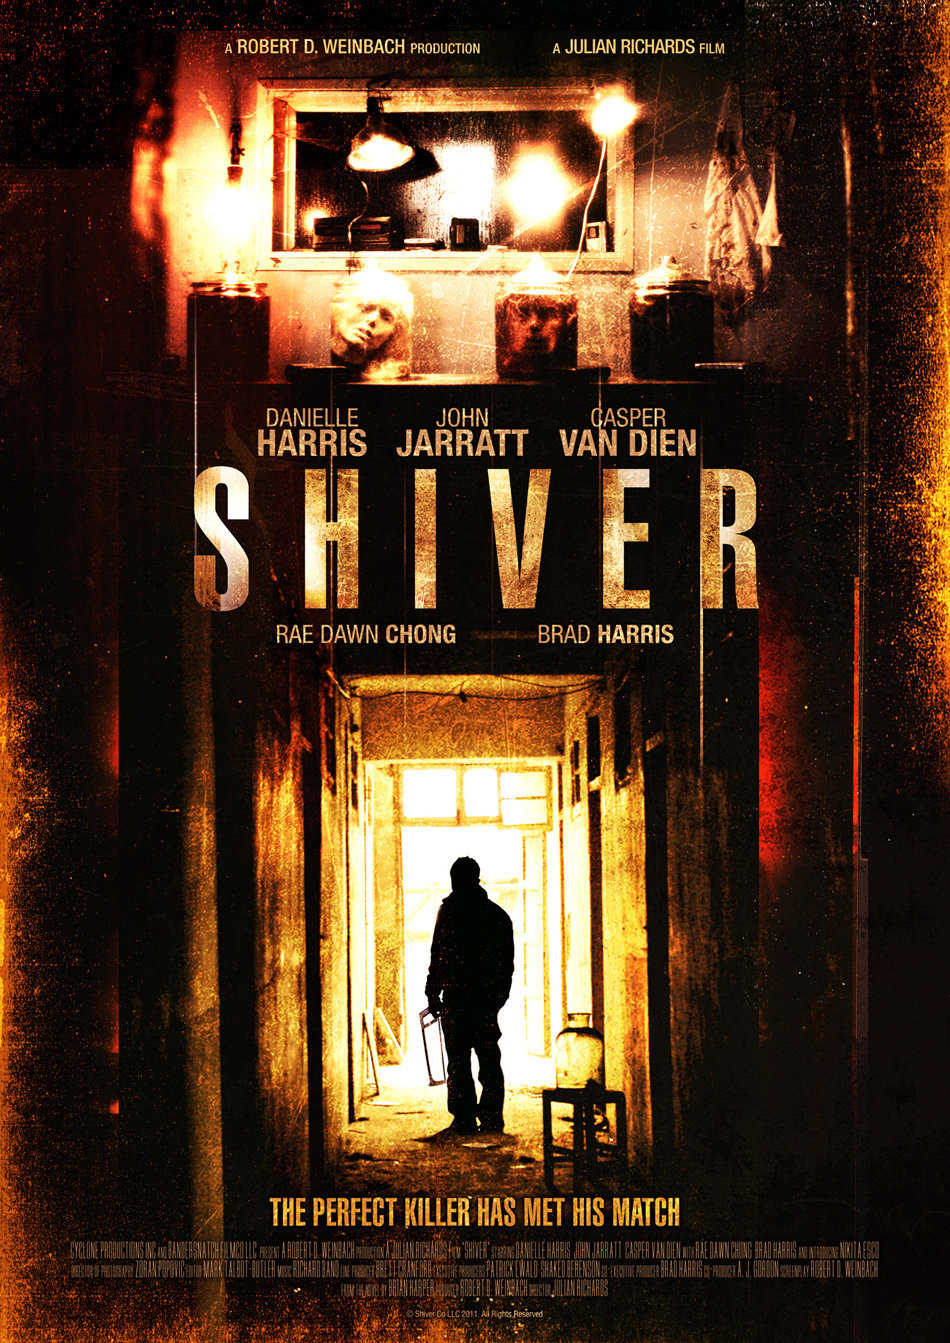 Shiver (2012) Screenshot 1 